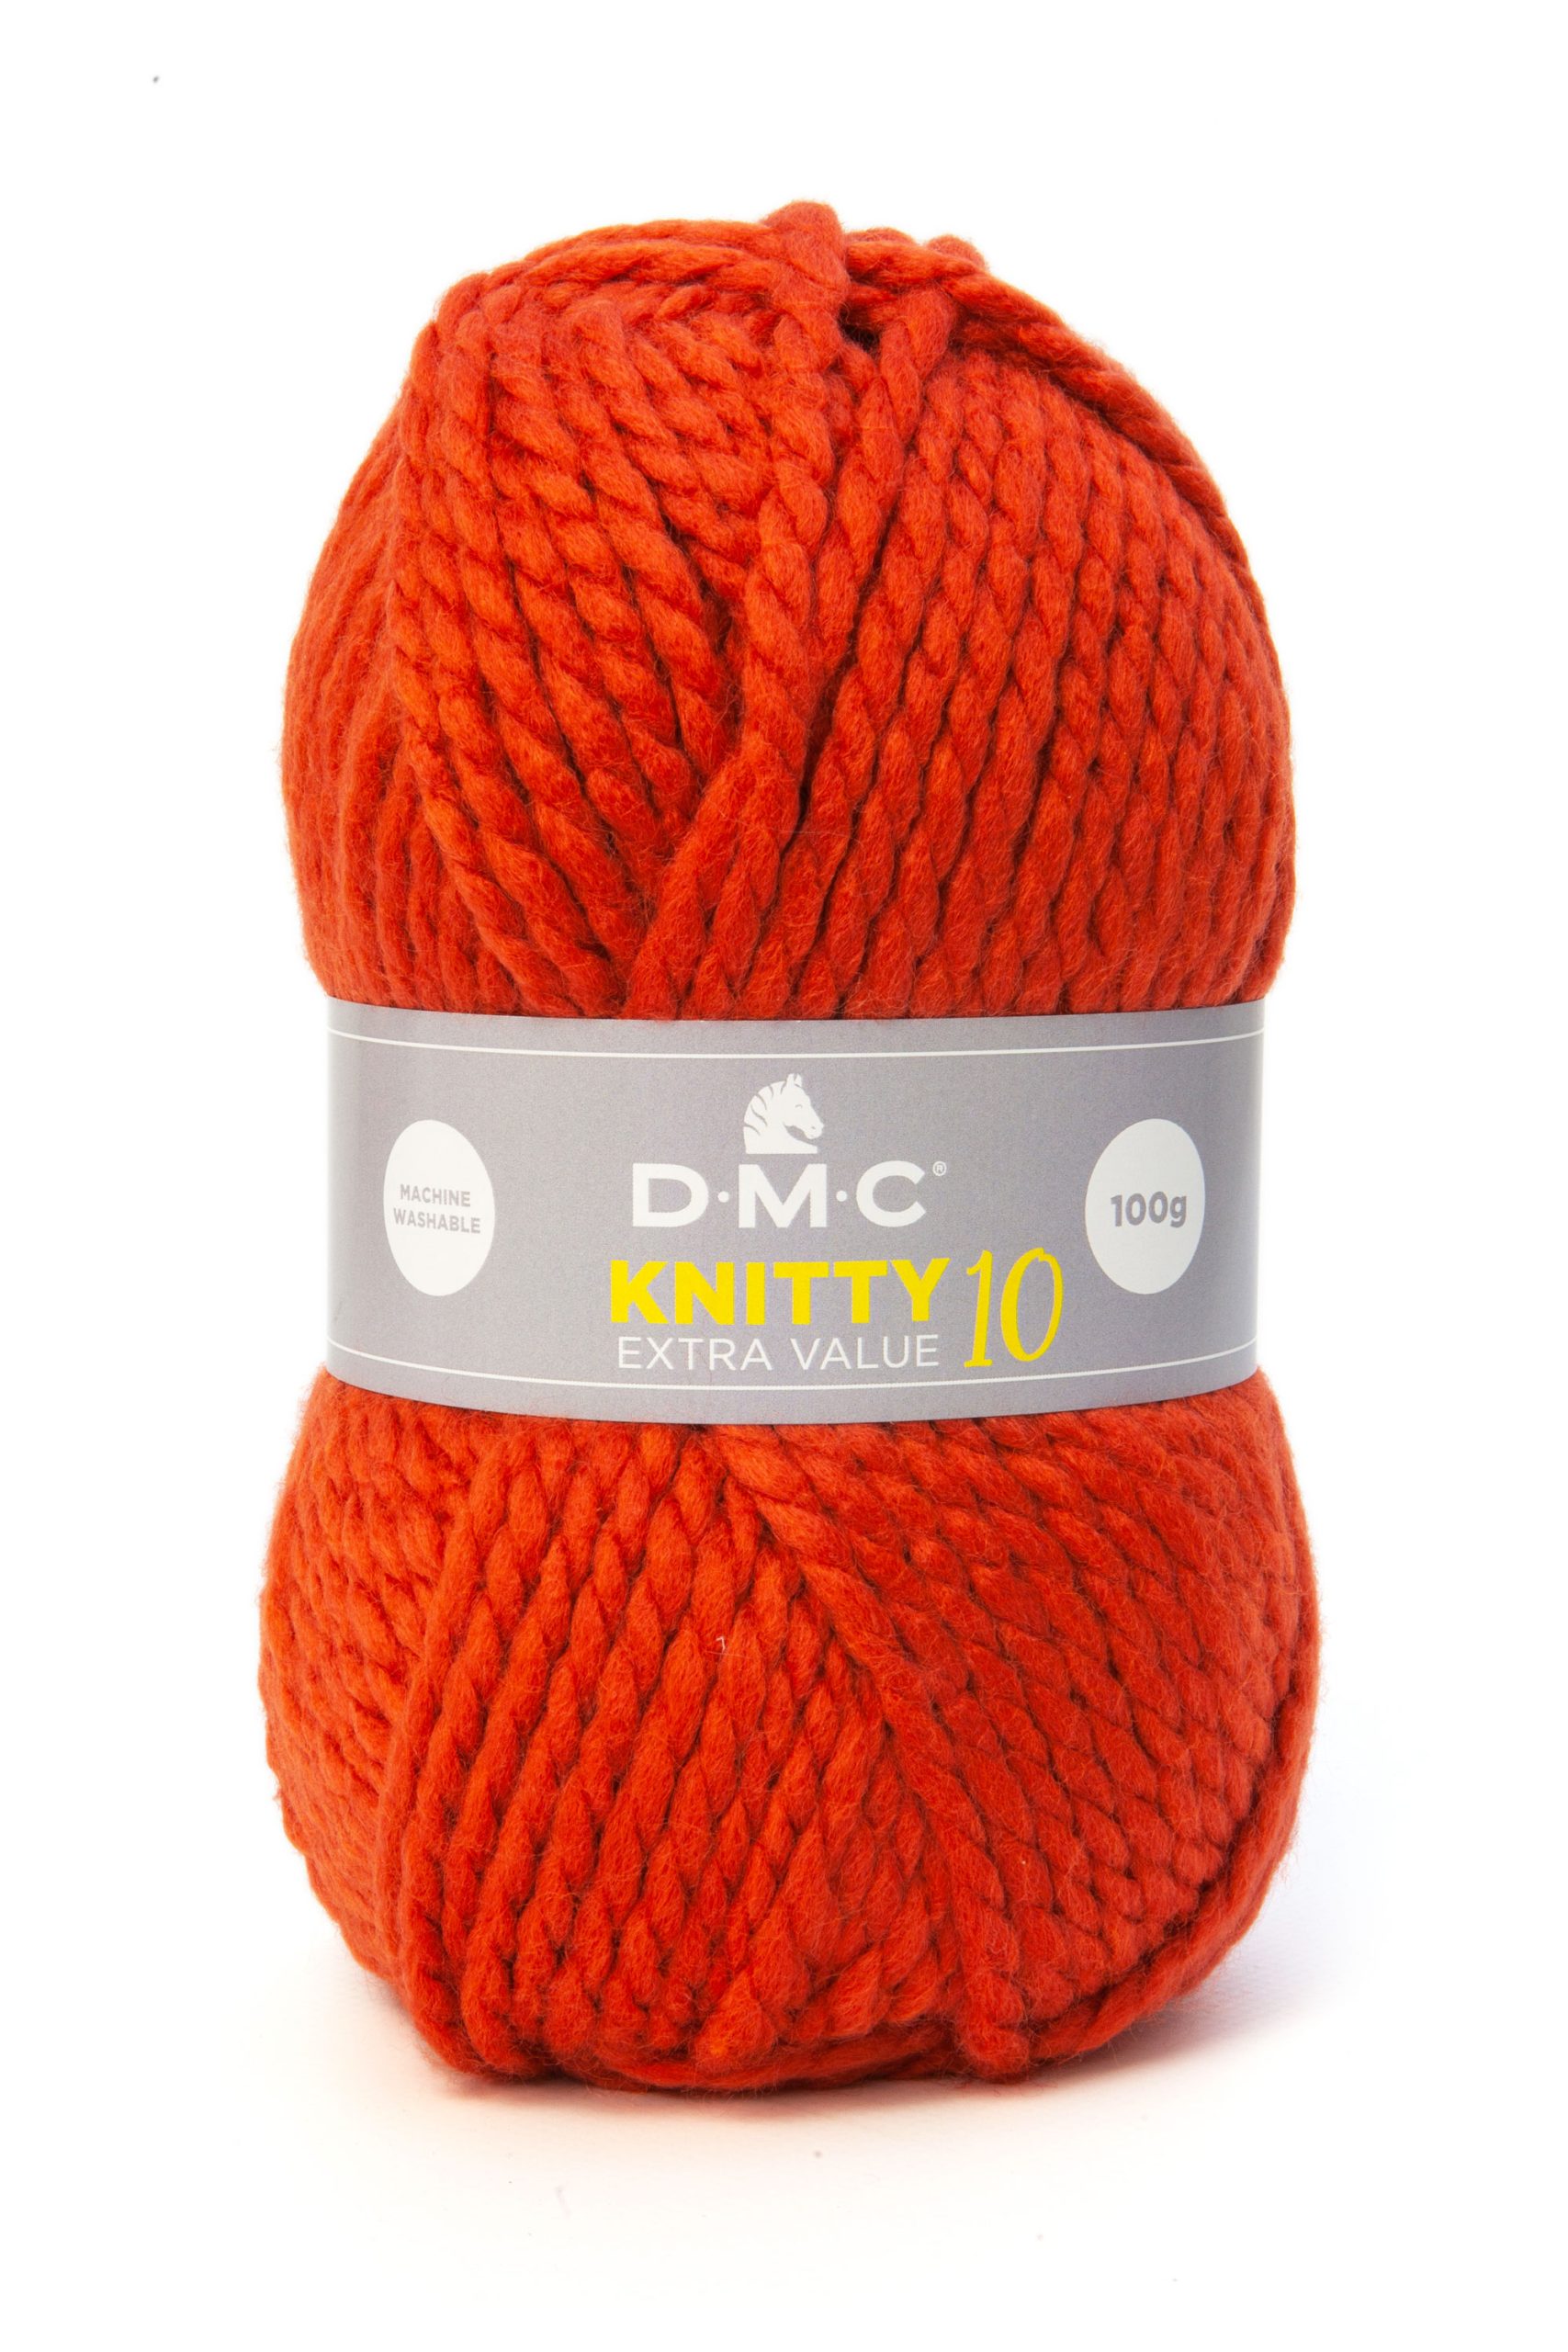 Lana Dmc Knitty 10 Colore 779